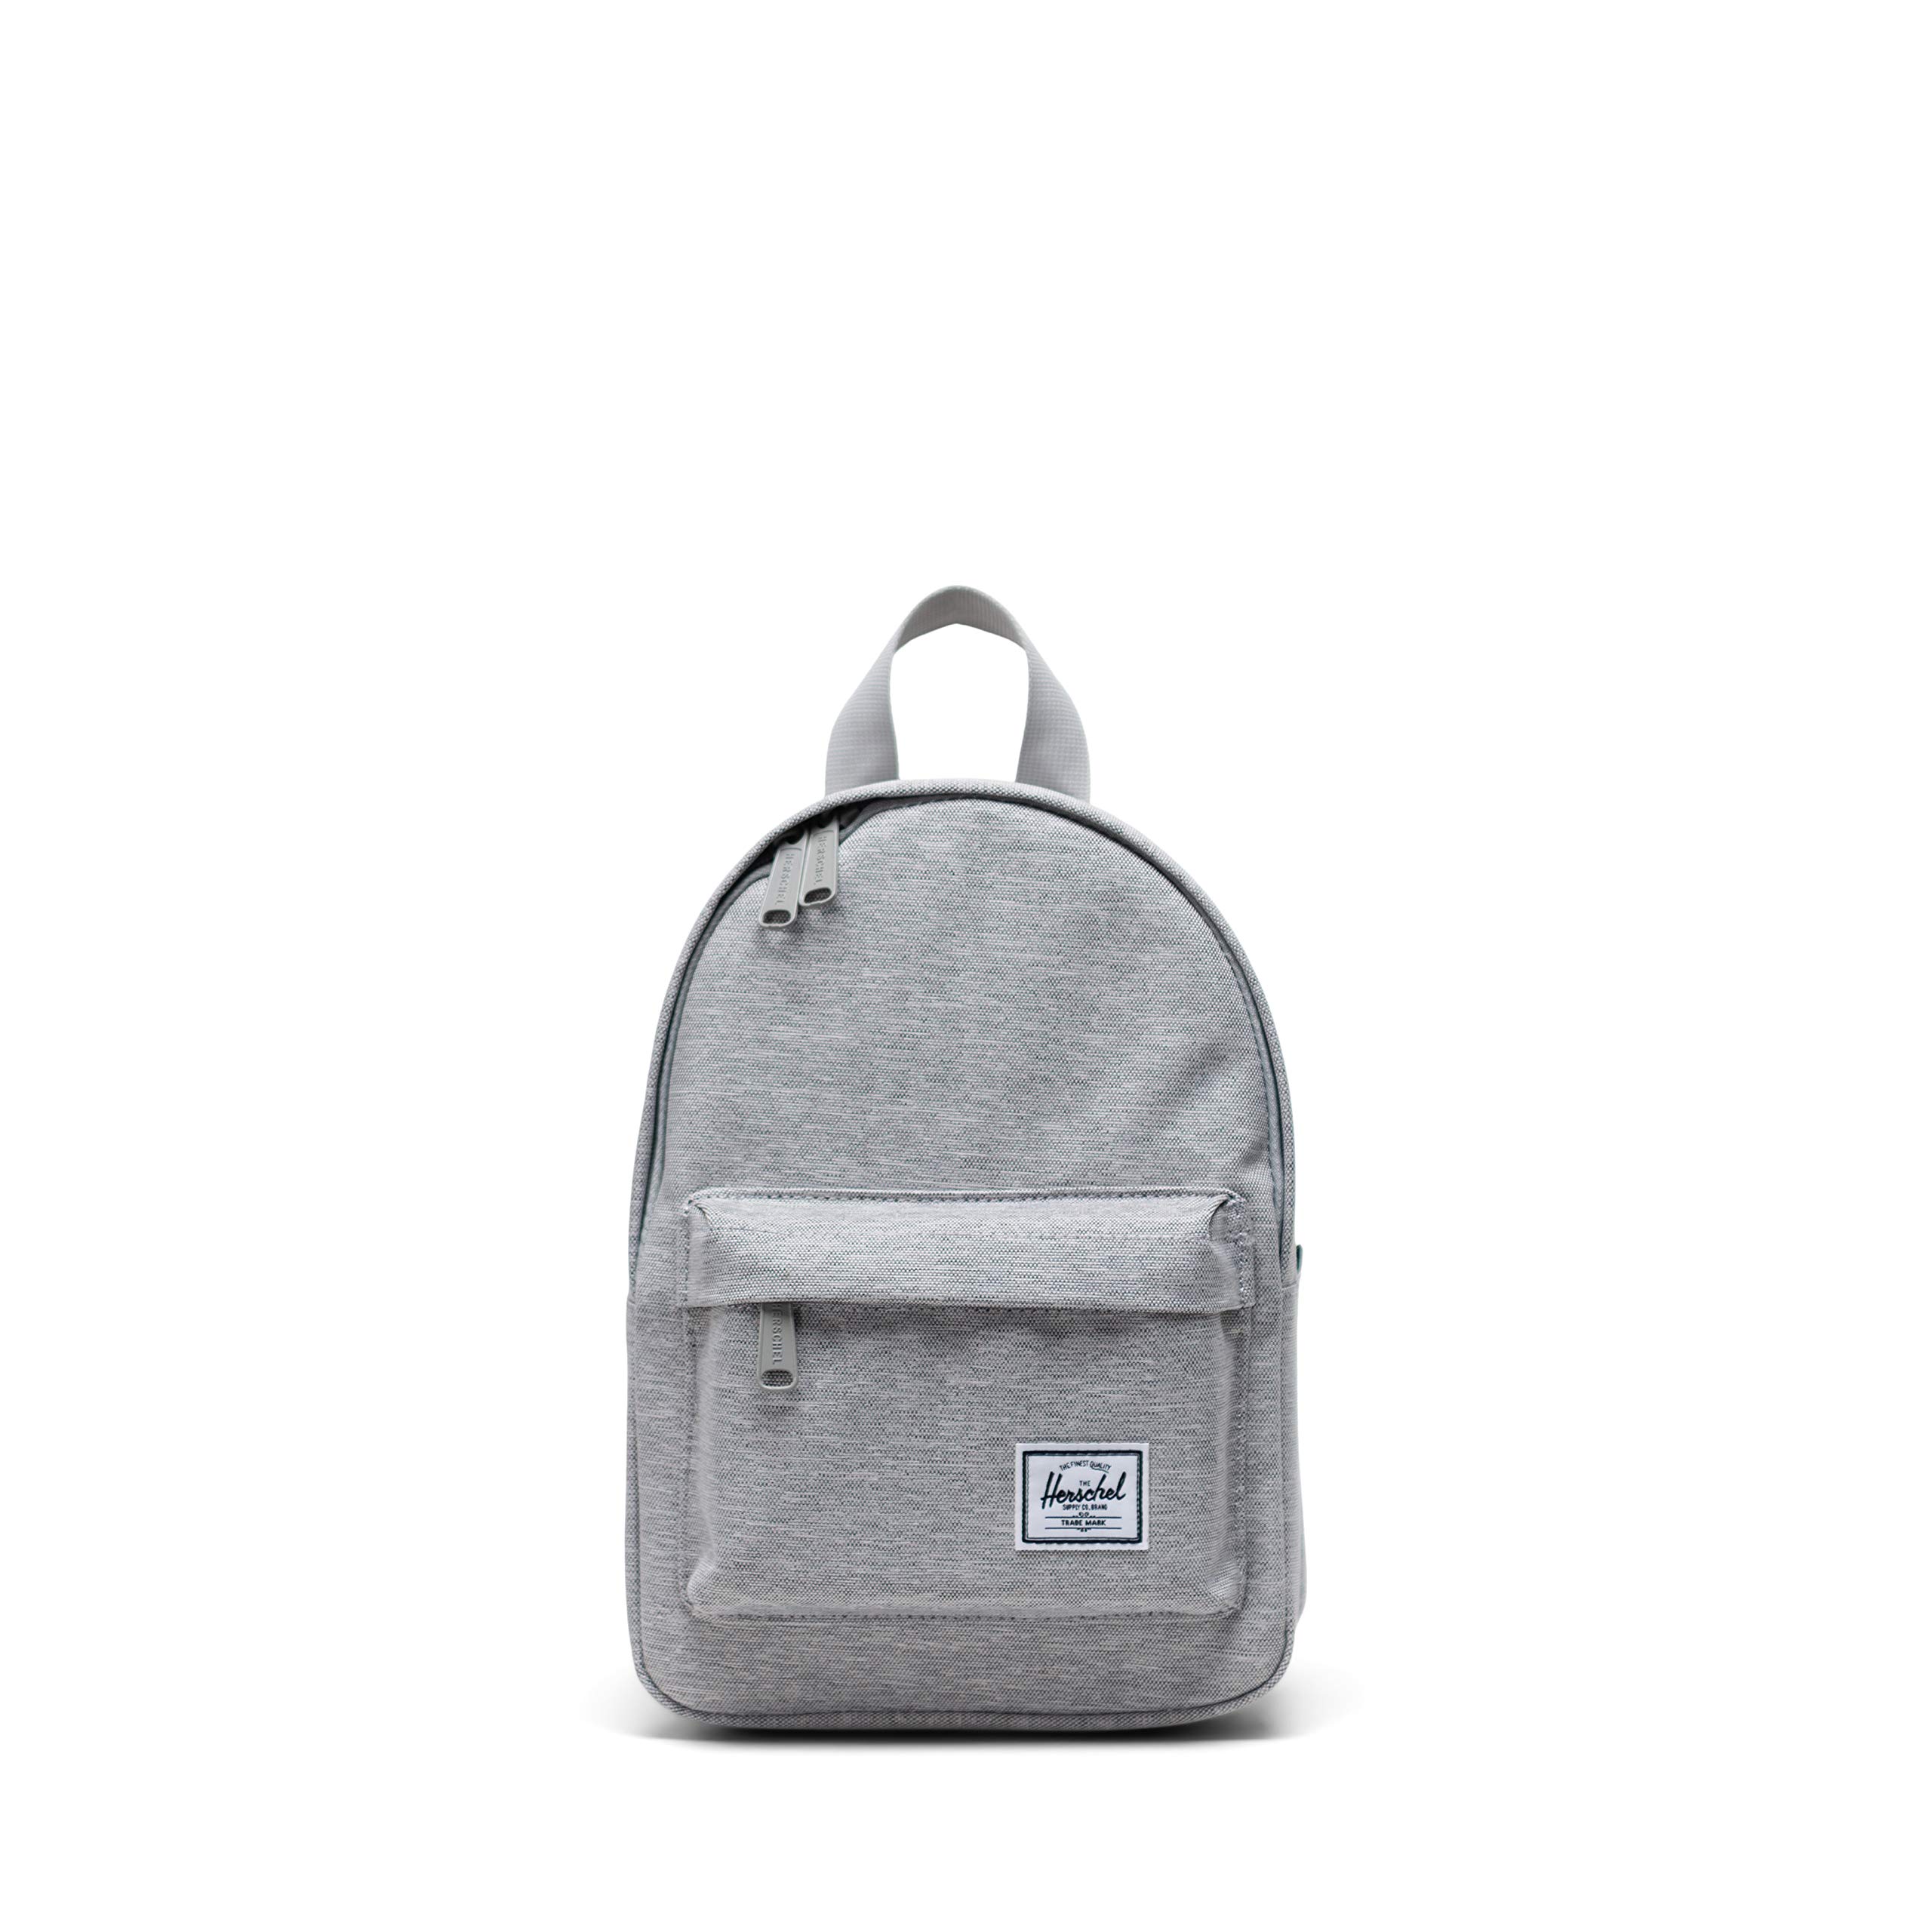 Herschel Classic Backpack, Light Grey Crosshatch, Mini 9.0L